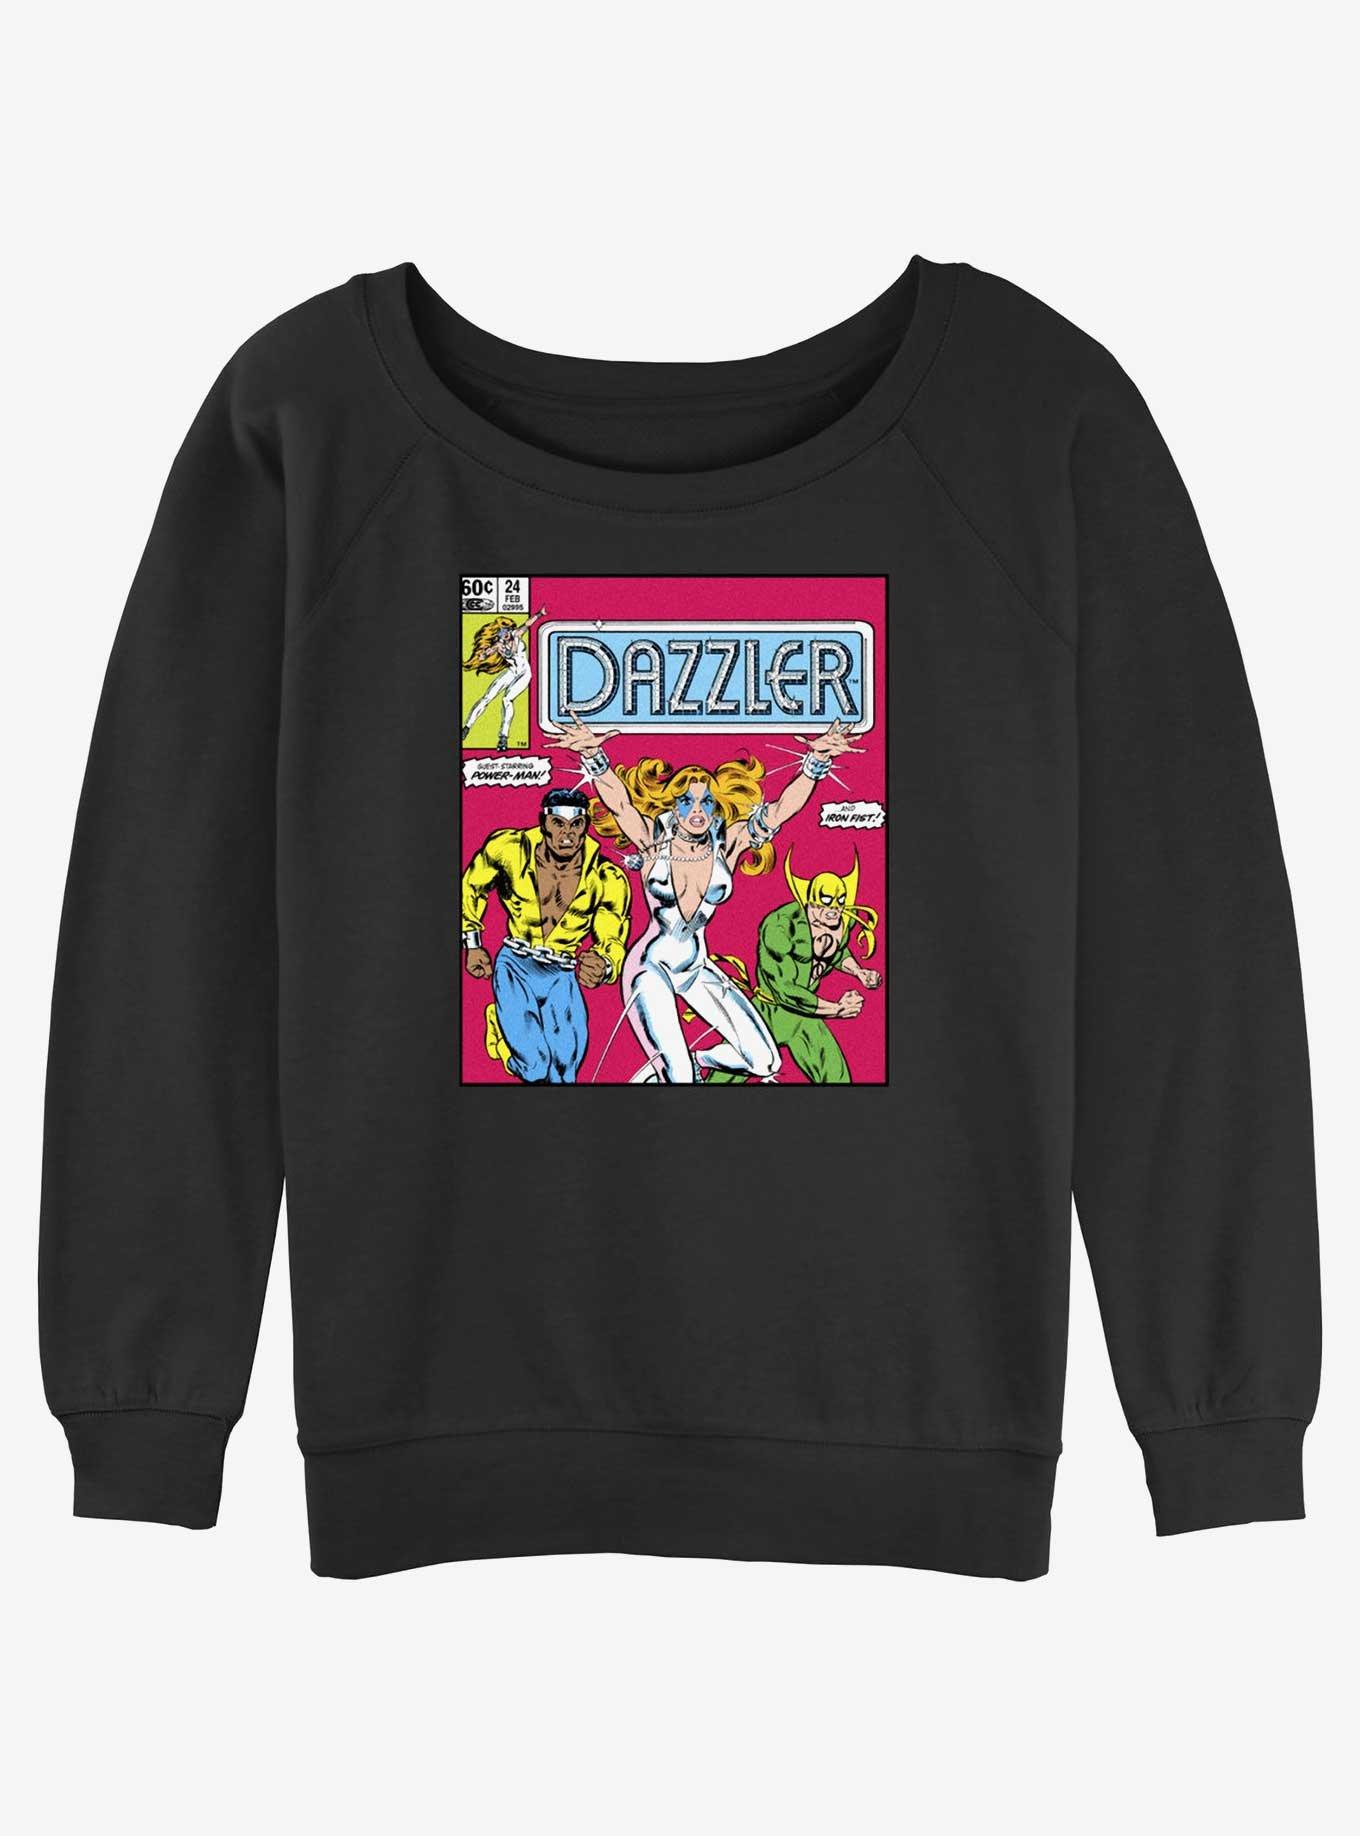 Marvel Dazzler Power Man and Iron Fist Comic Cover Girls Slouchy Sweatshirt, BLACK, hi-res